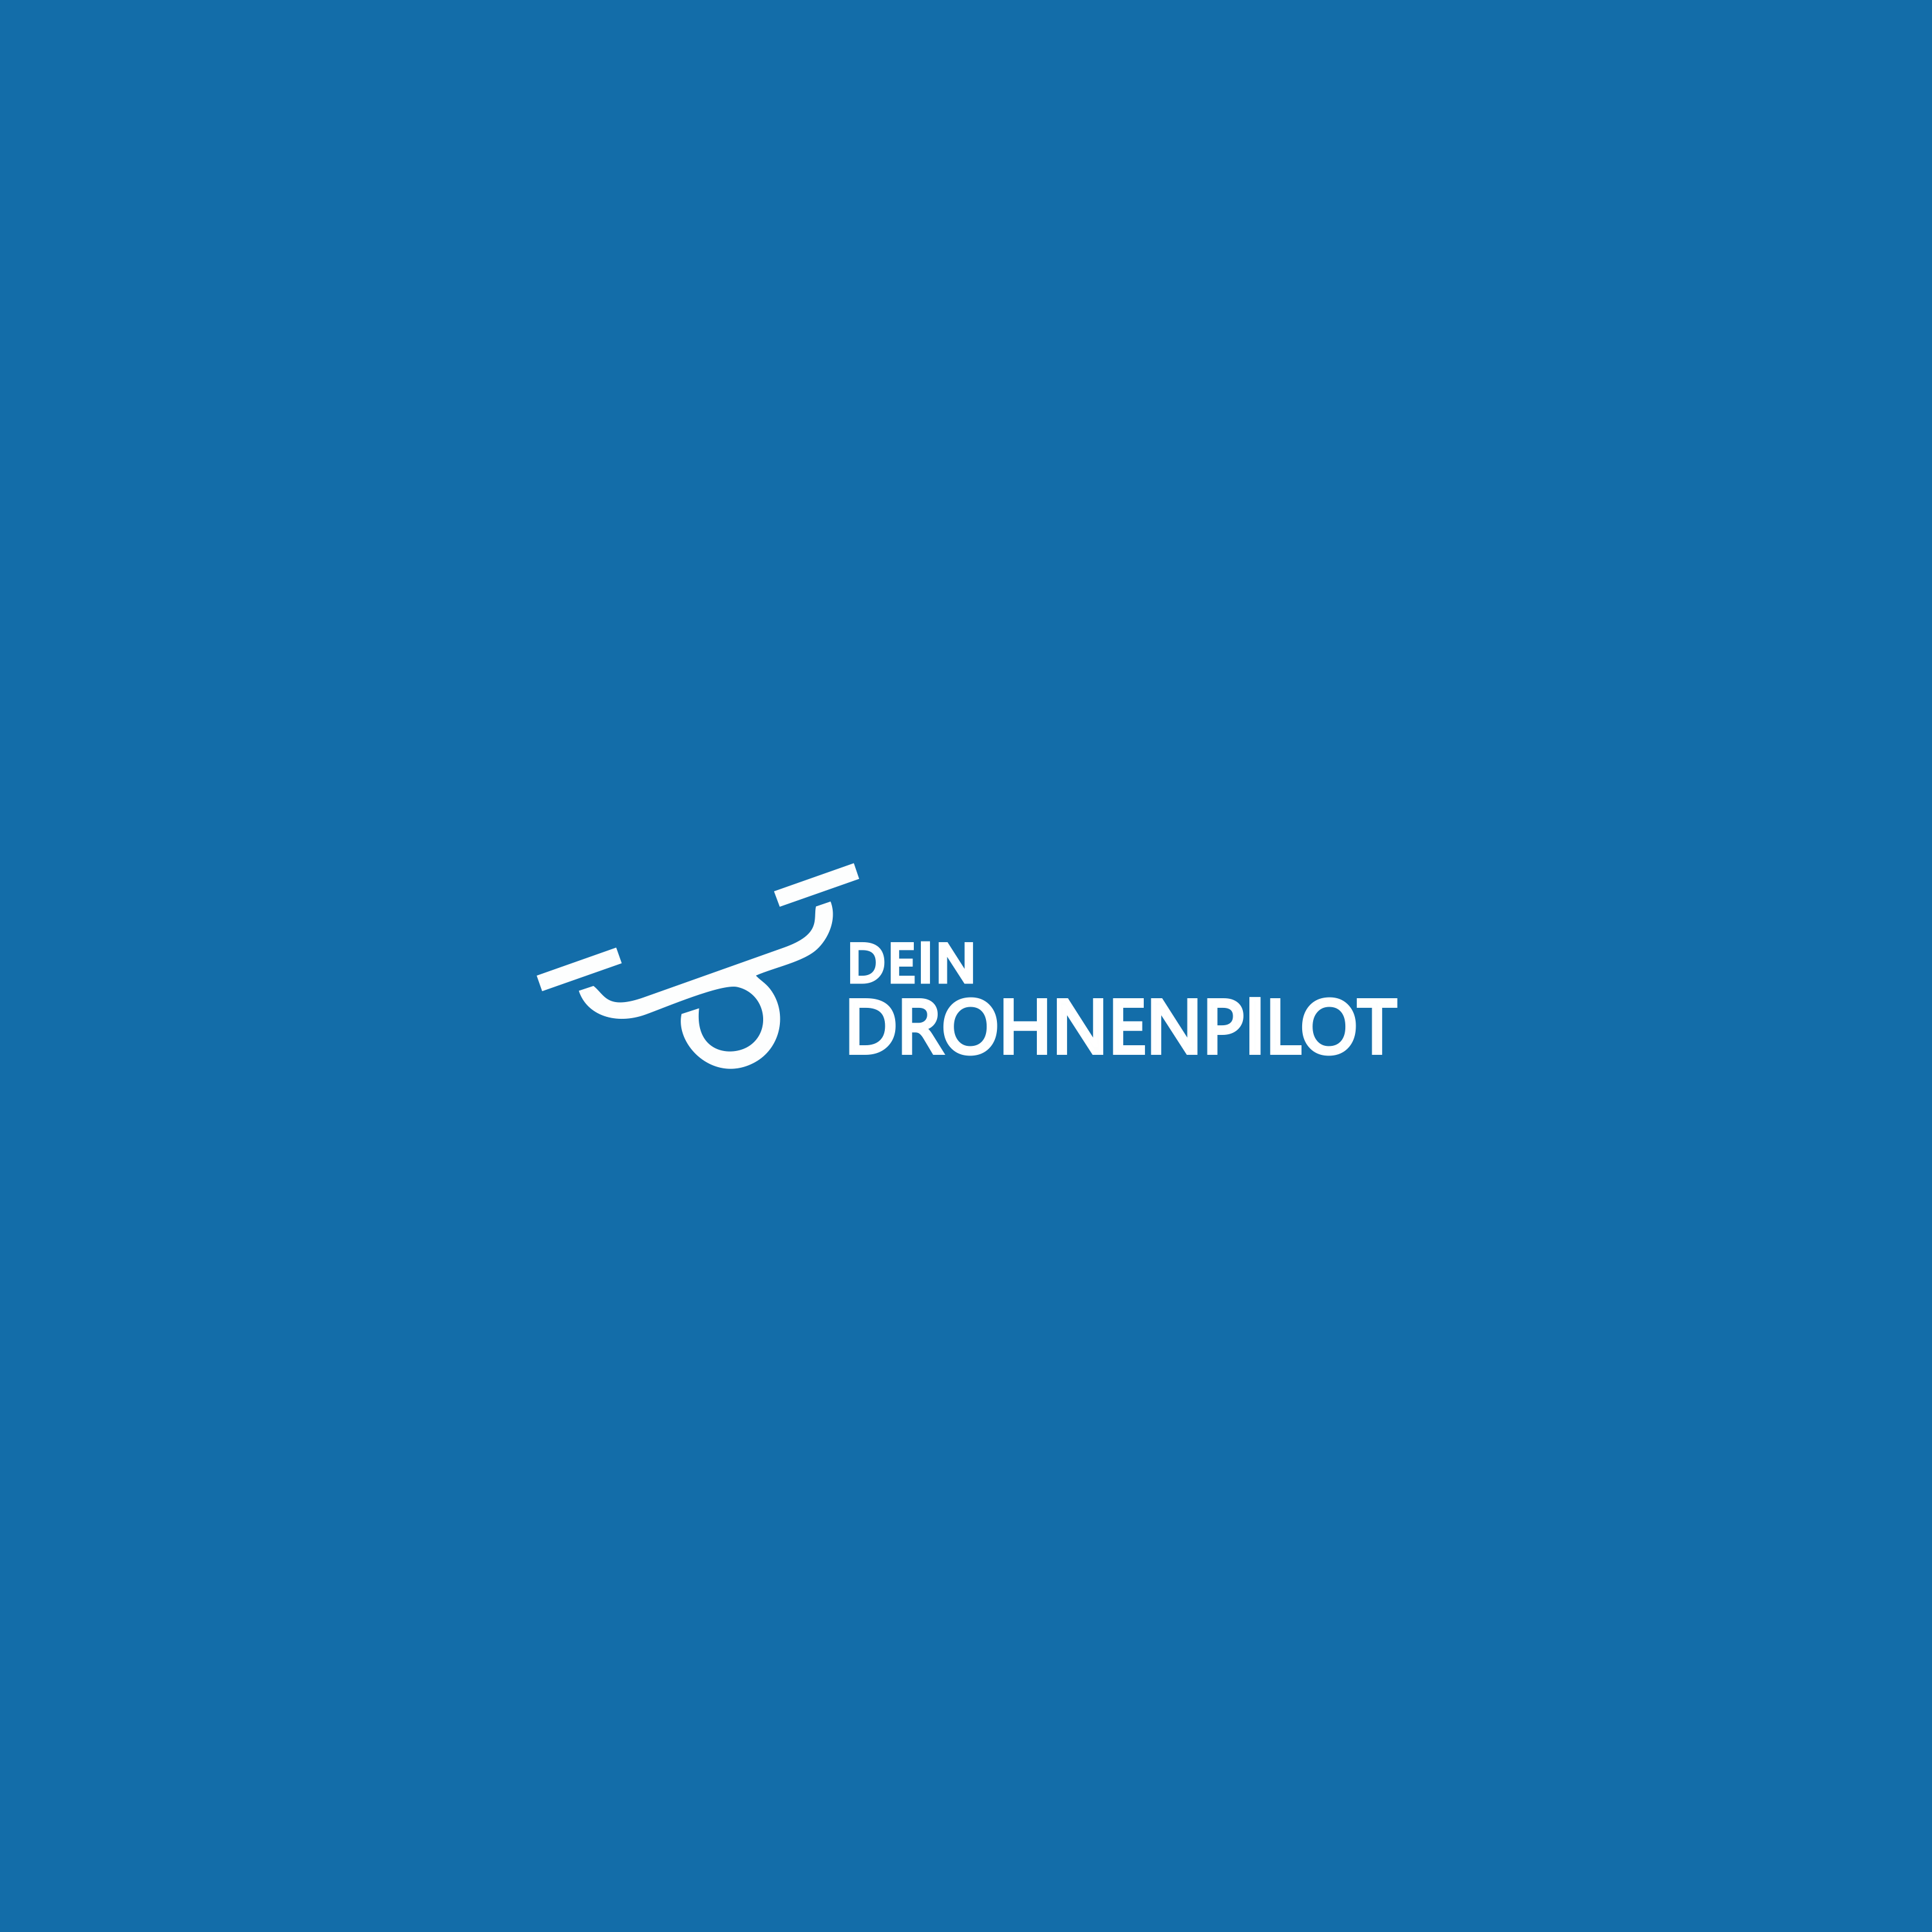 Dein-Drohnenpilot-Logo